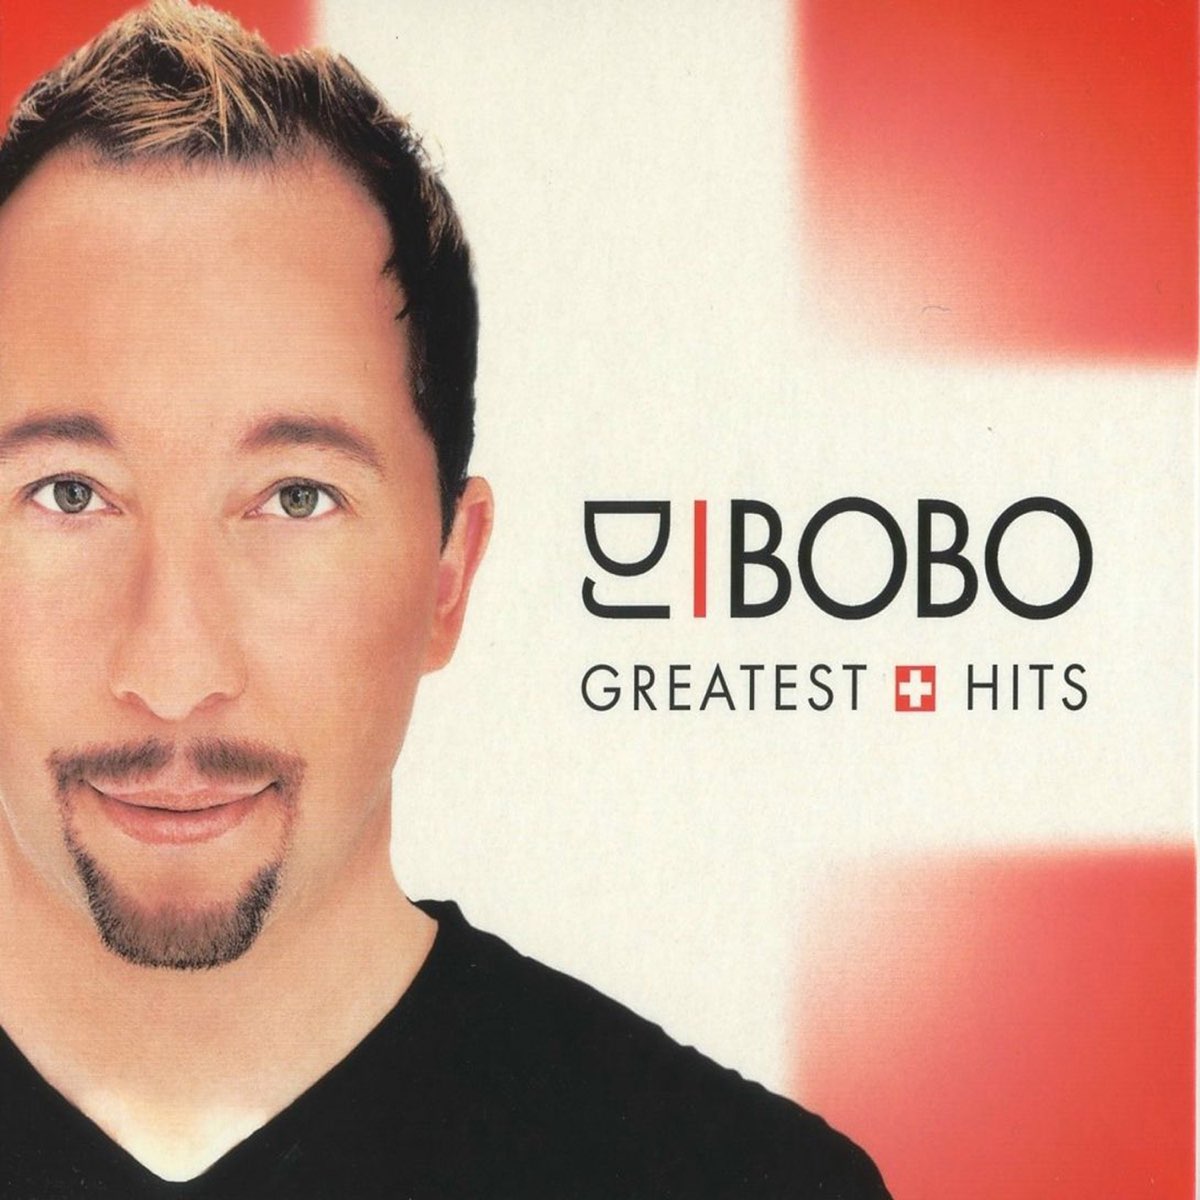 DJ Bobo обложка. DJ Bobo "Greatest Hits". DJ Bobo Постер. Дж бобо фото. Бобо слушать